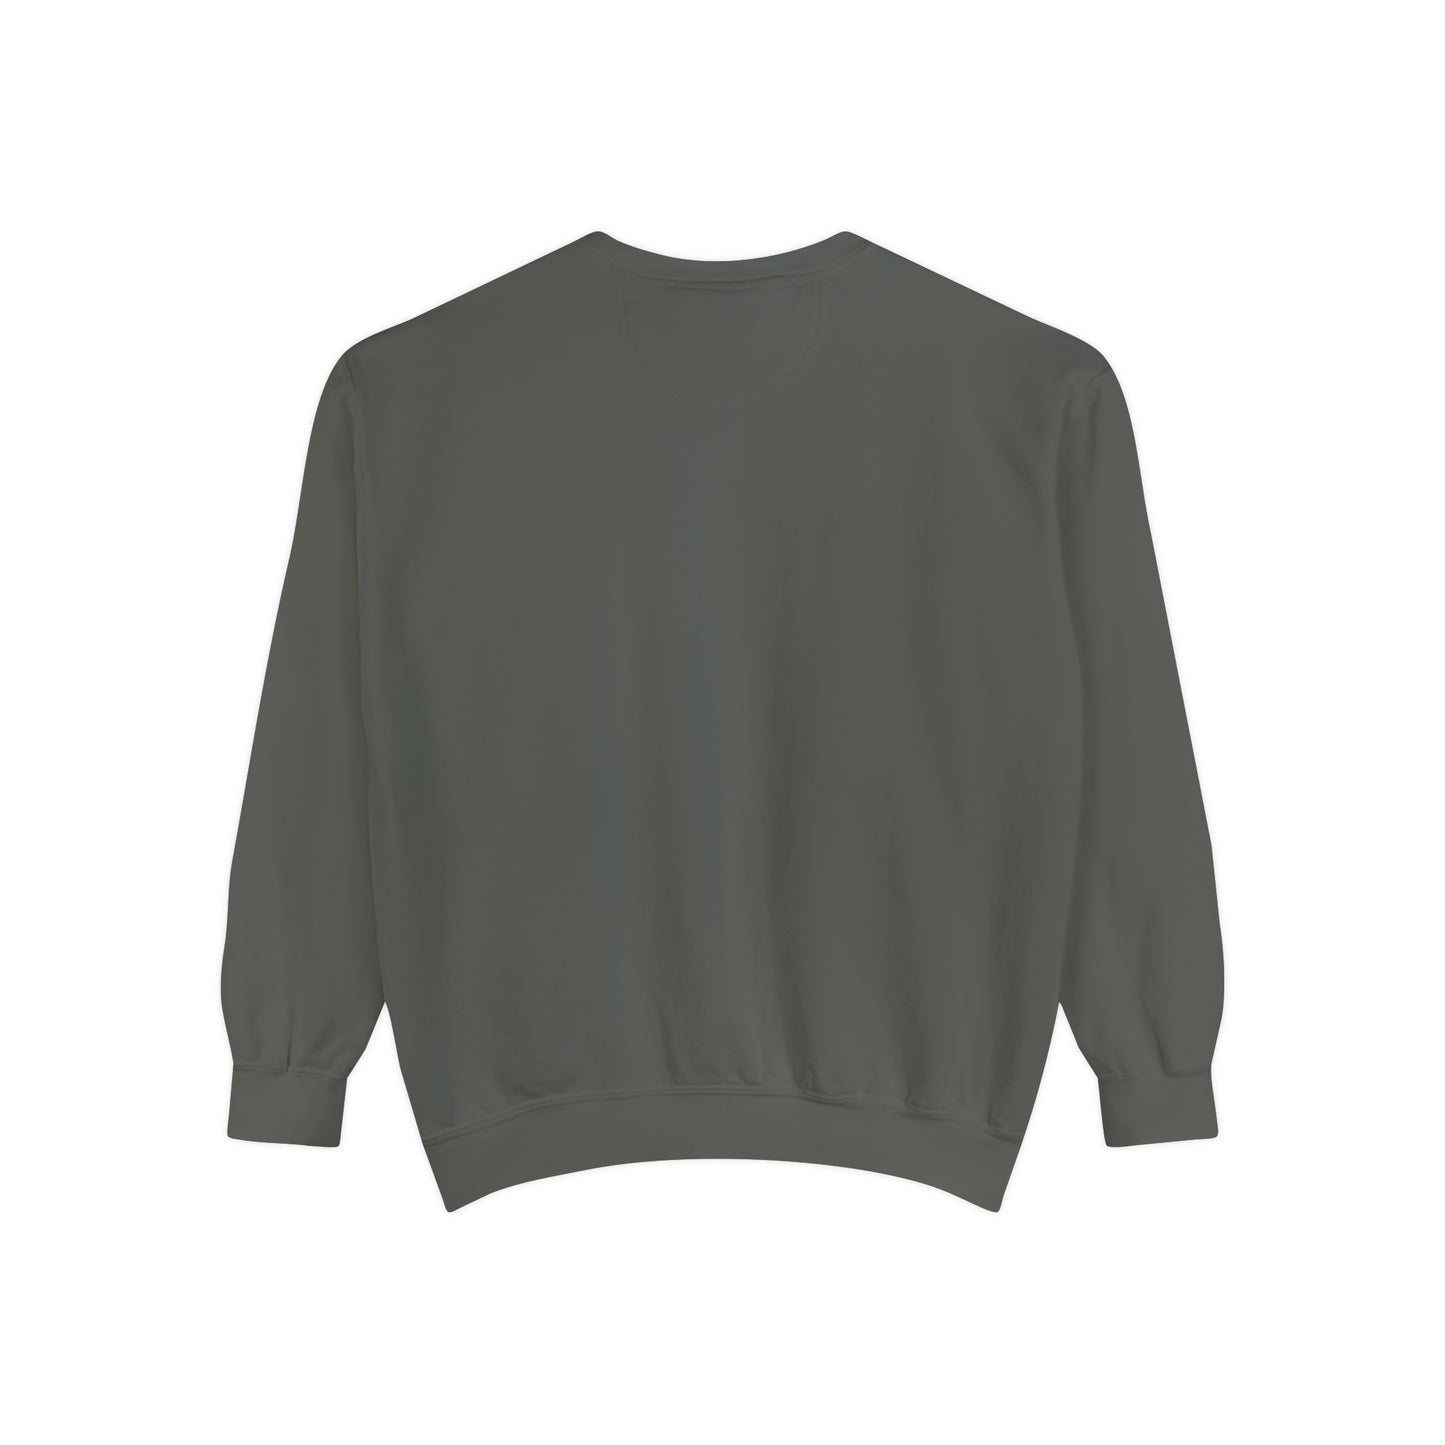 Military O-SHOT Unisex Garment-Dyed Sweatshirt